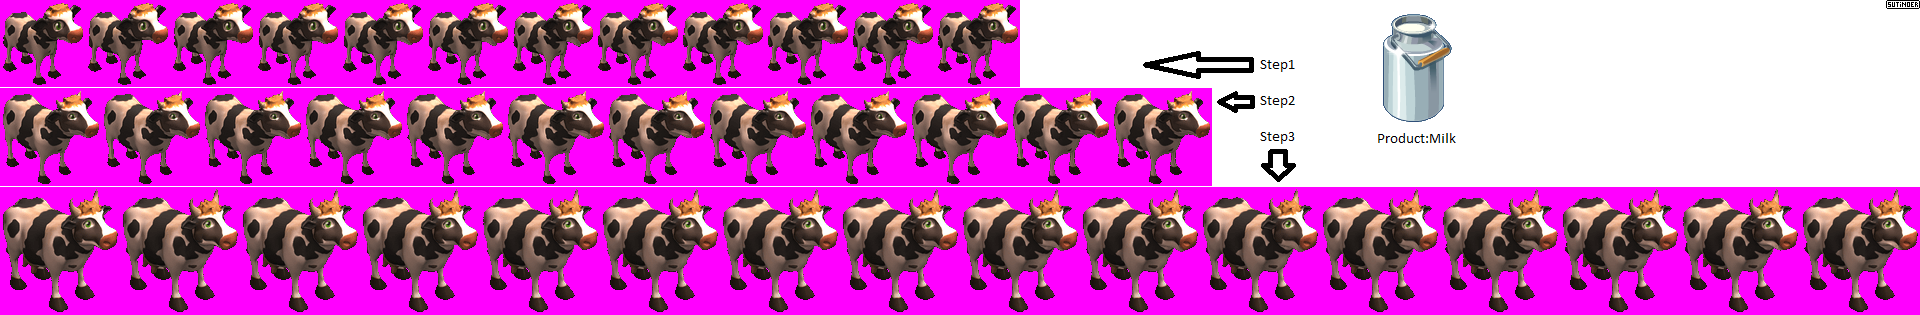 Big Farm Theory - Cow